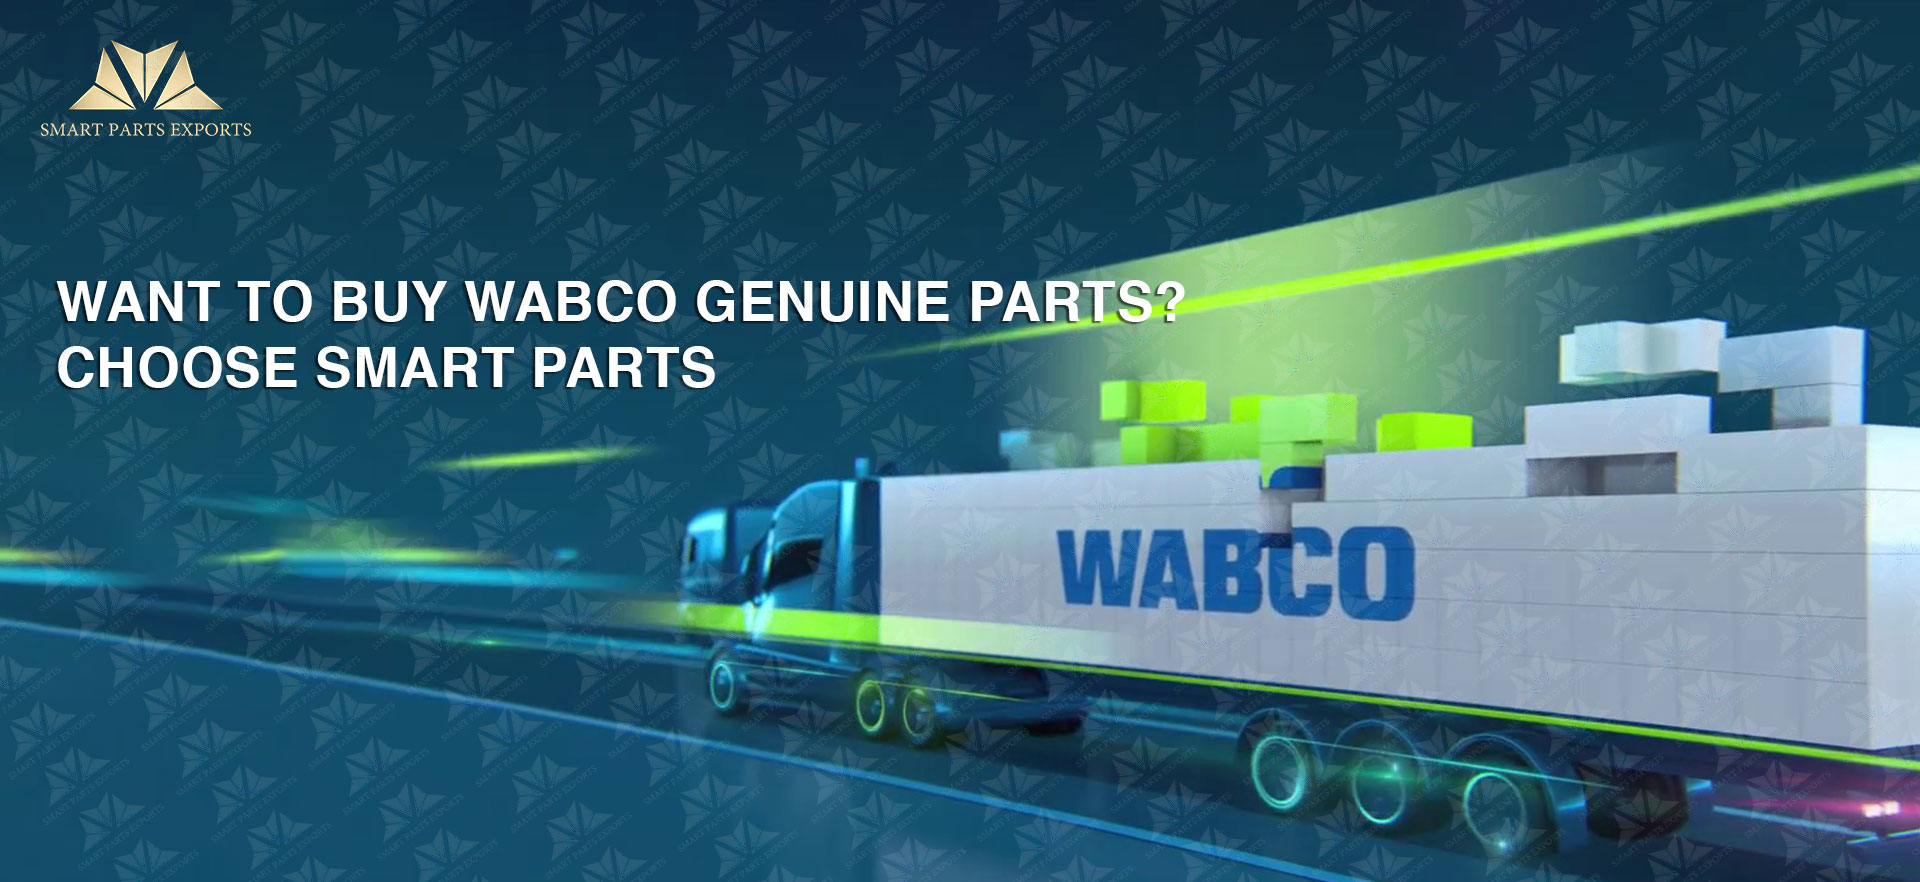 Want to Buy Wabco Genuine Parts? Choose Smart Parts